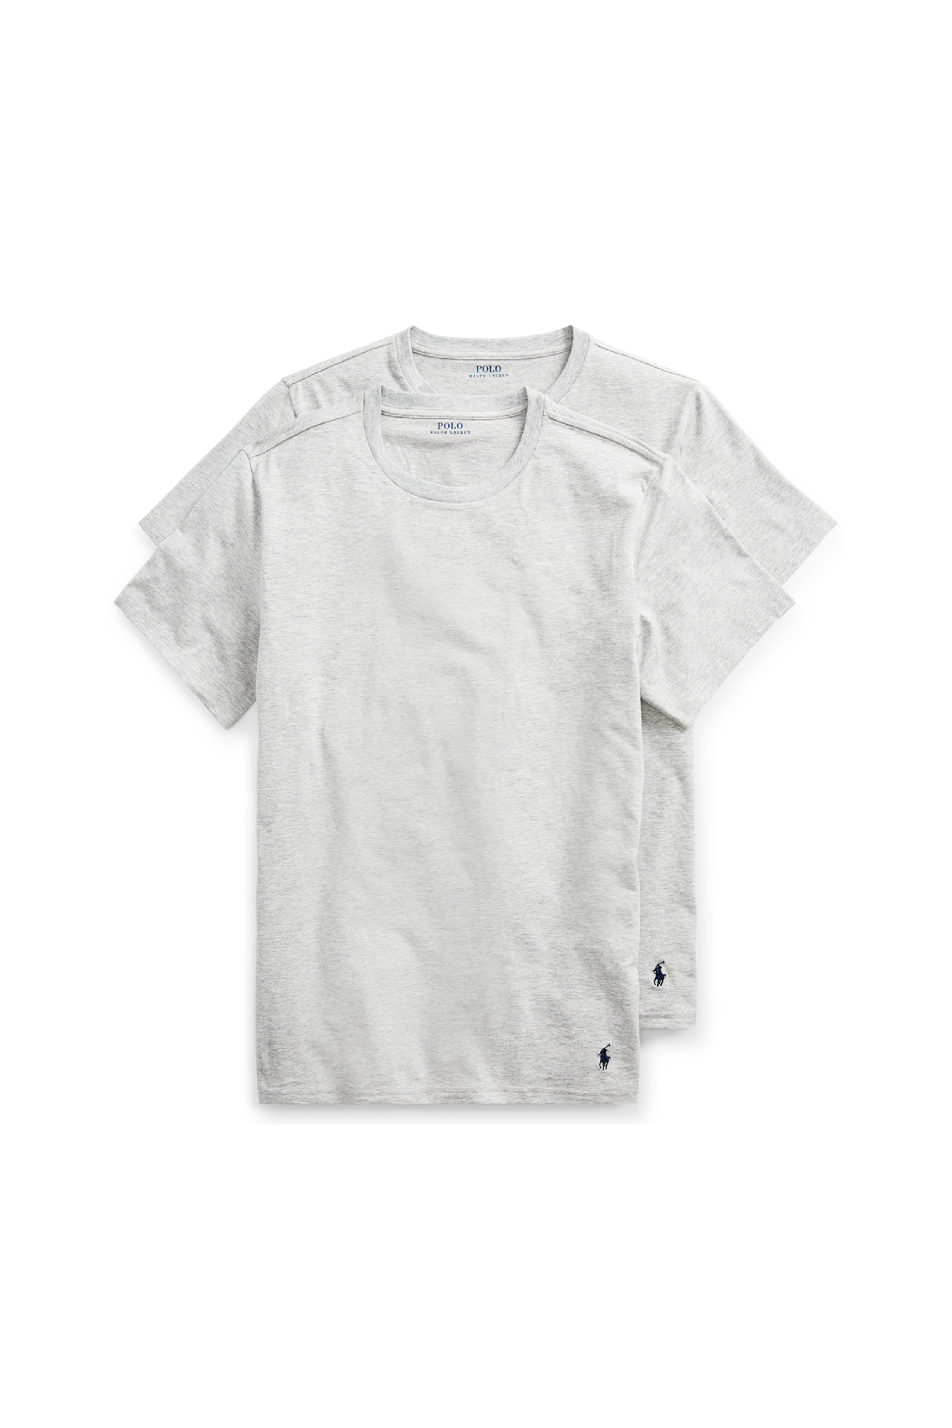 Polo Ralph Lauren Men's 2 Pack Crew T-Shirt